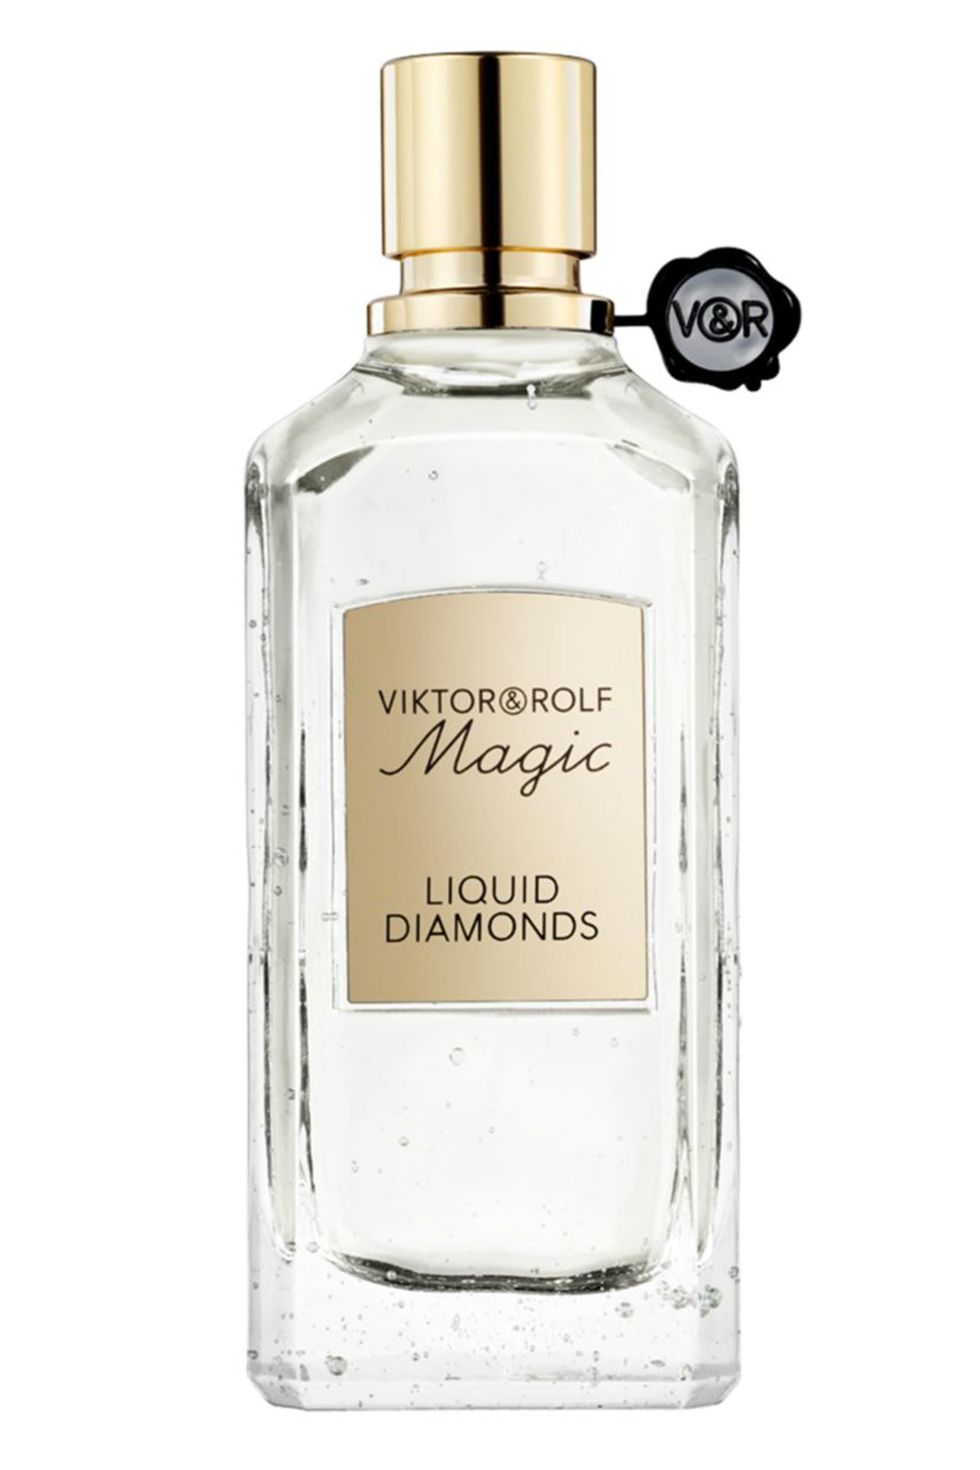 Viktor&Rolf Magic Liquid Diamonds Eau de Parfum